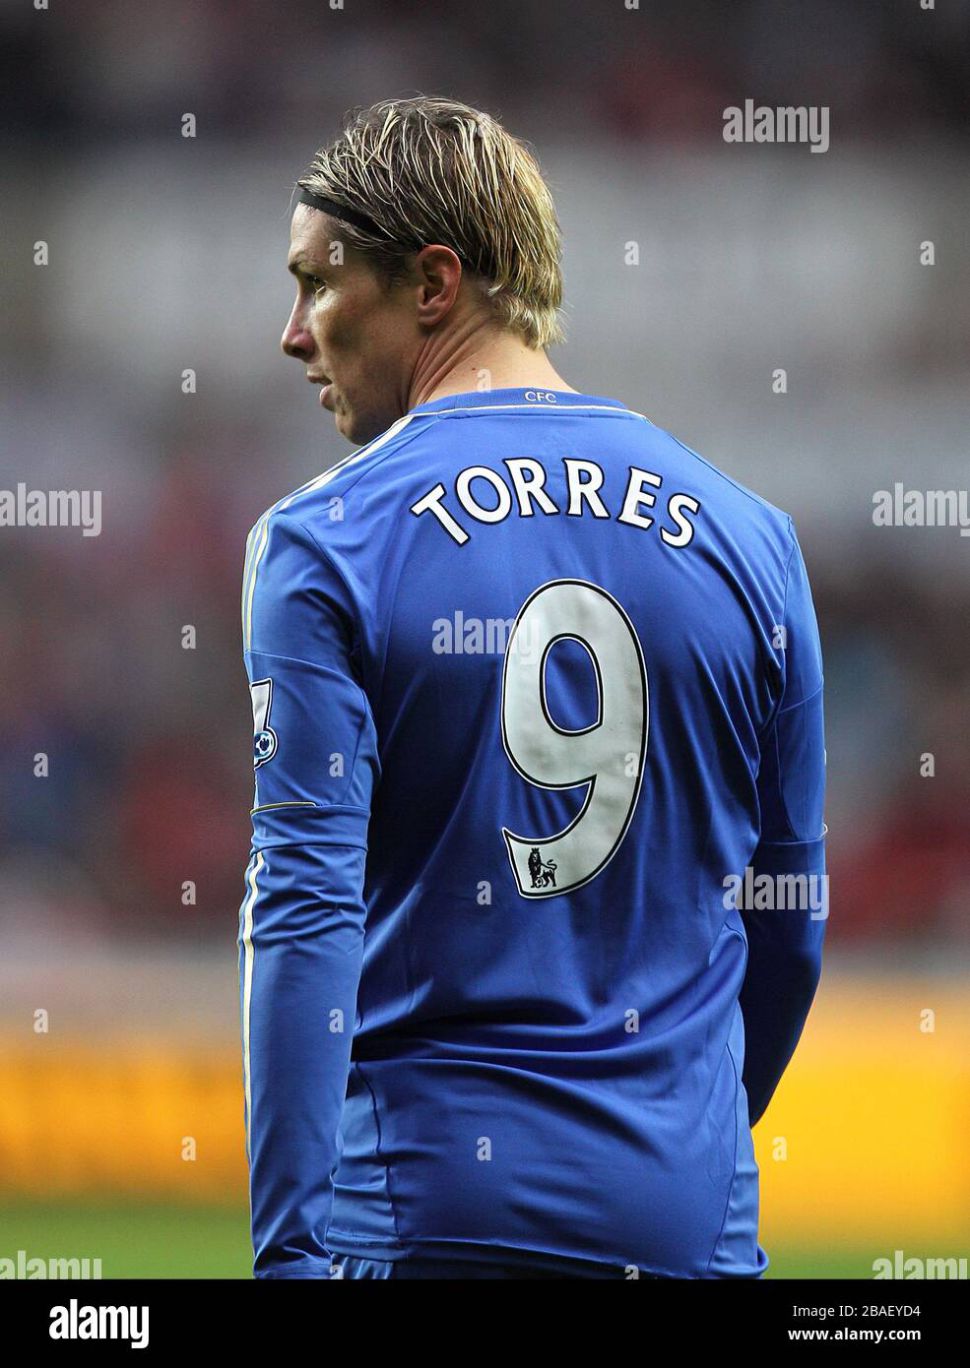 Nameset Torres 9 Liverpool Chelsea Premier League 2007-2013 white